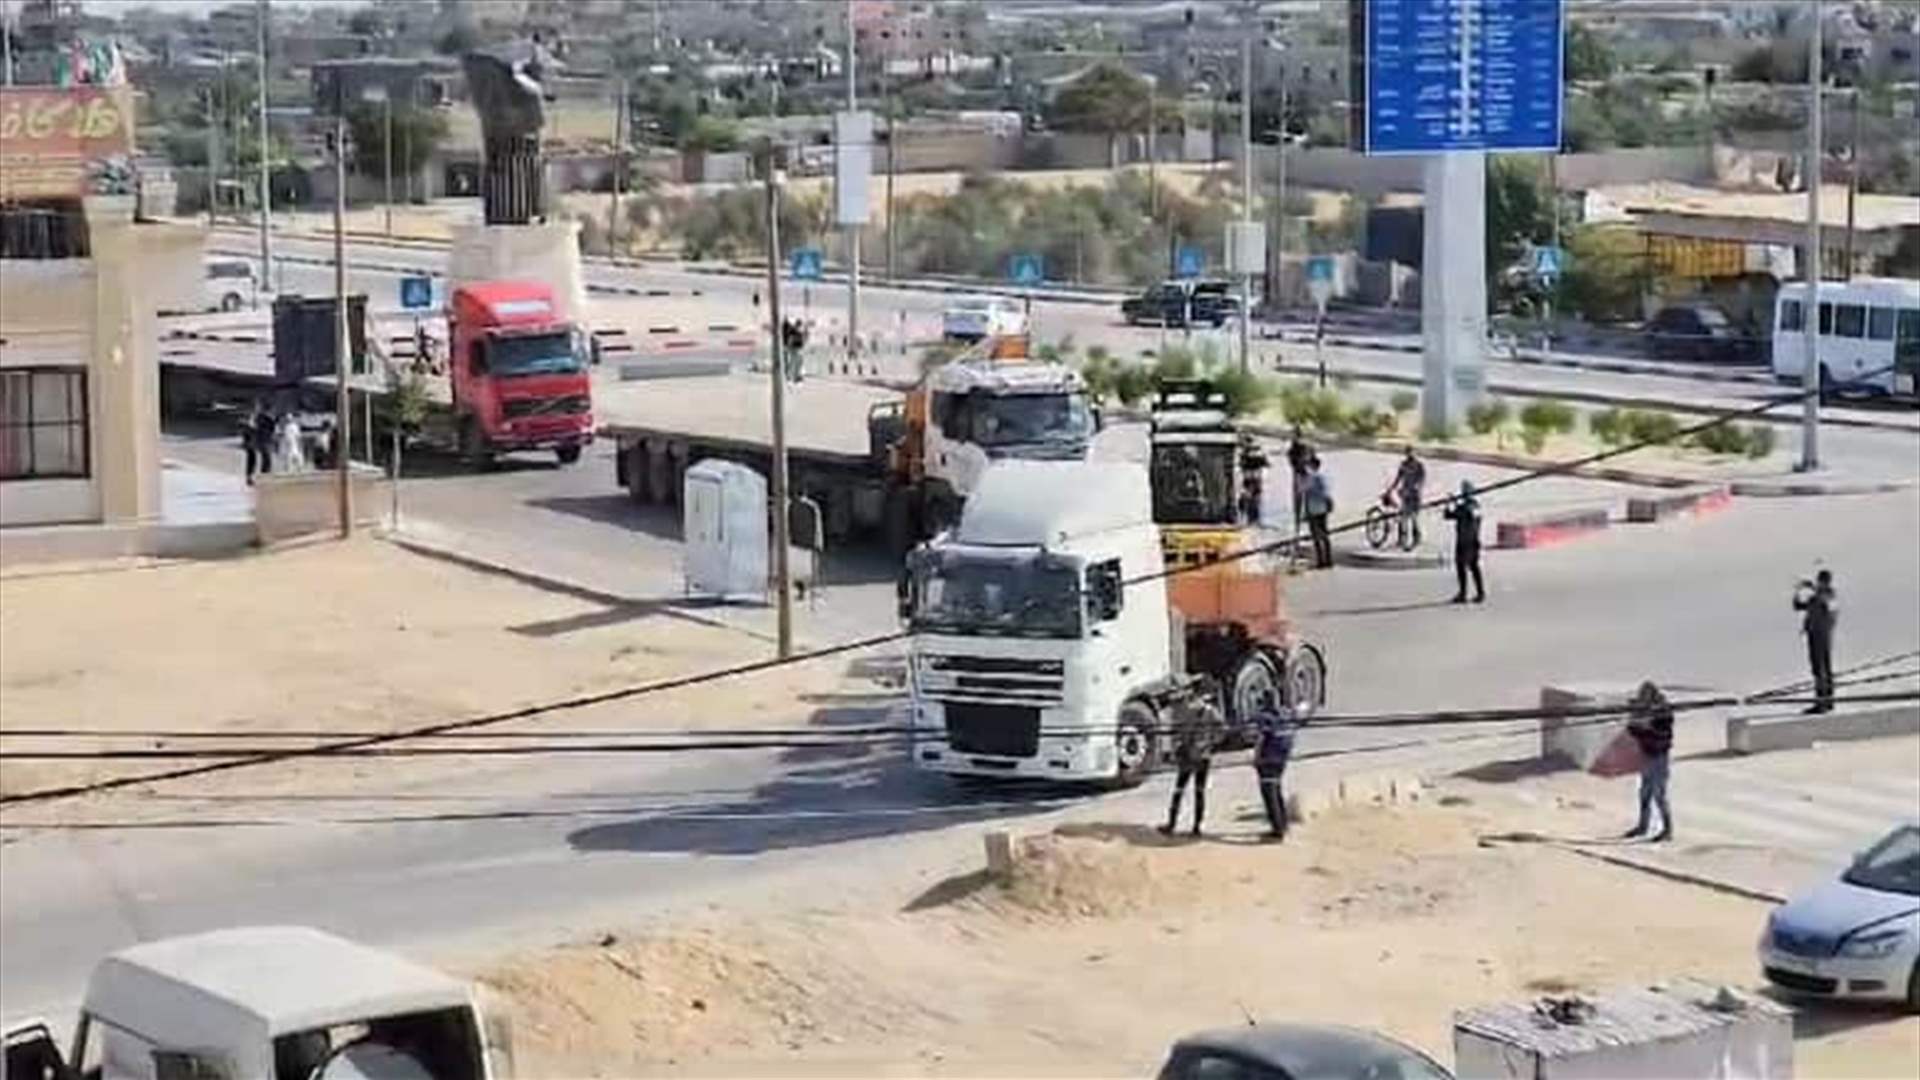 Palestinian Assistance